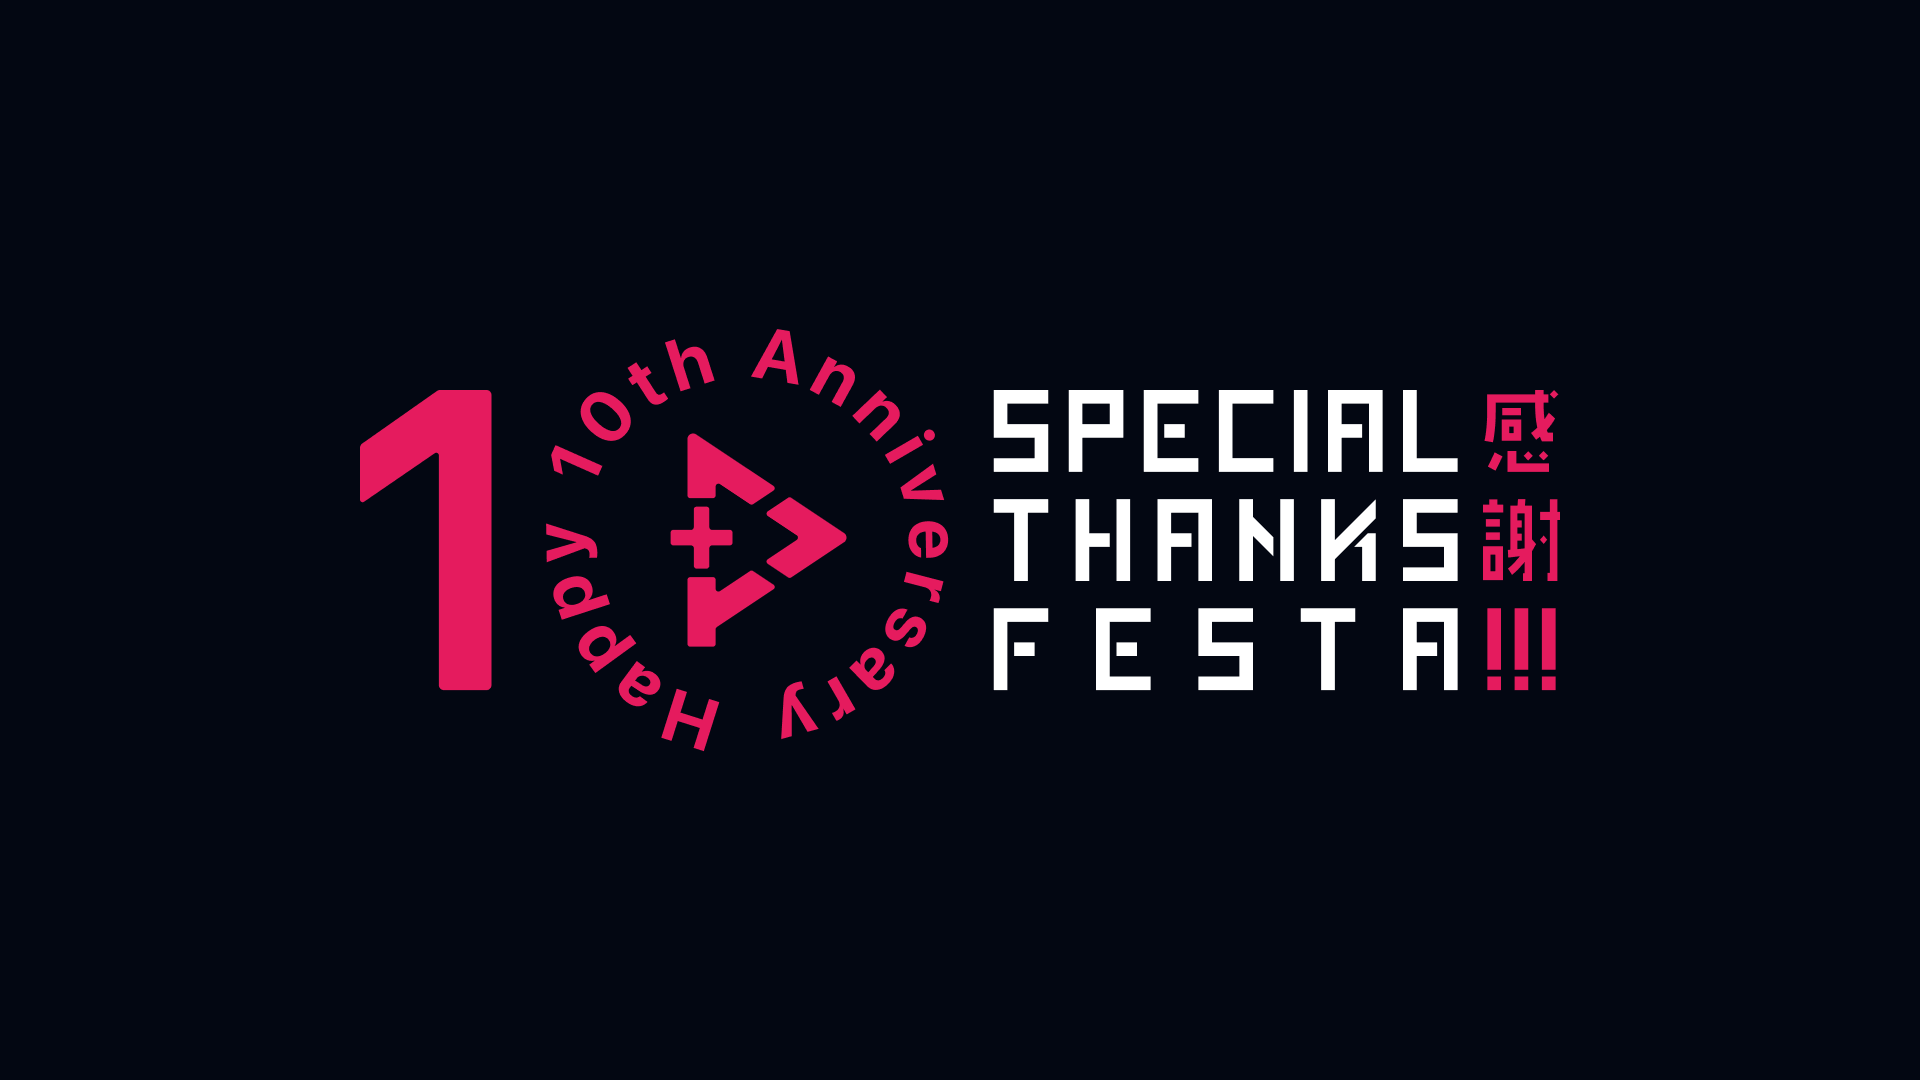 Prop Tech plus株式会社創立10周年記念パーティー「Happy 10th Anniversary SPECIAL THANKS FESTA」ロゴタイプ